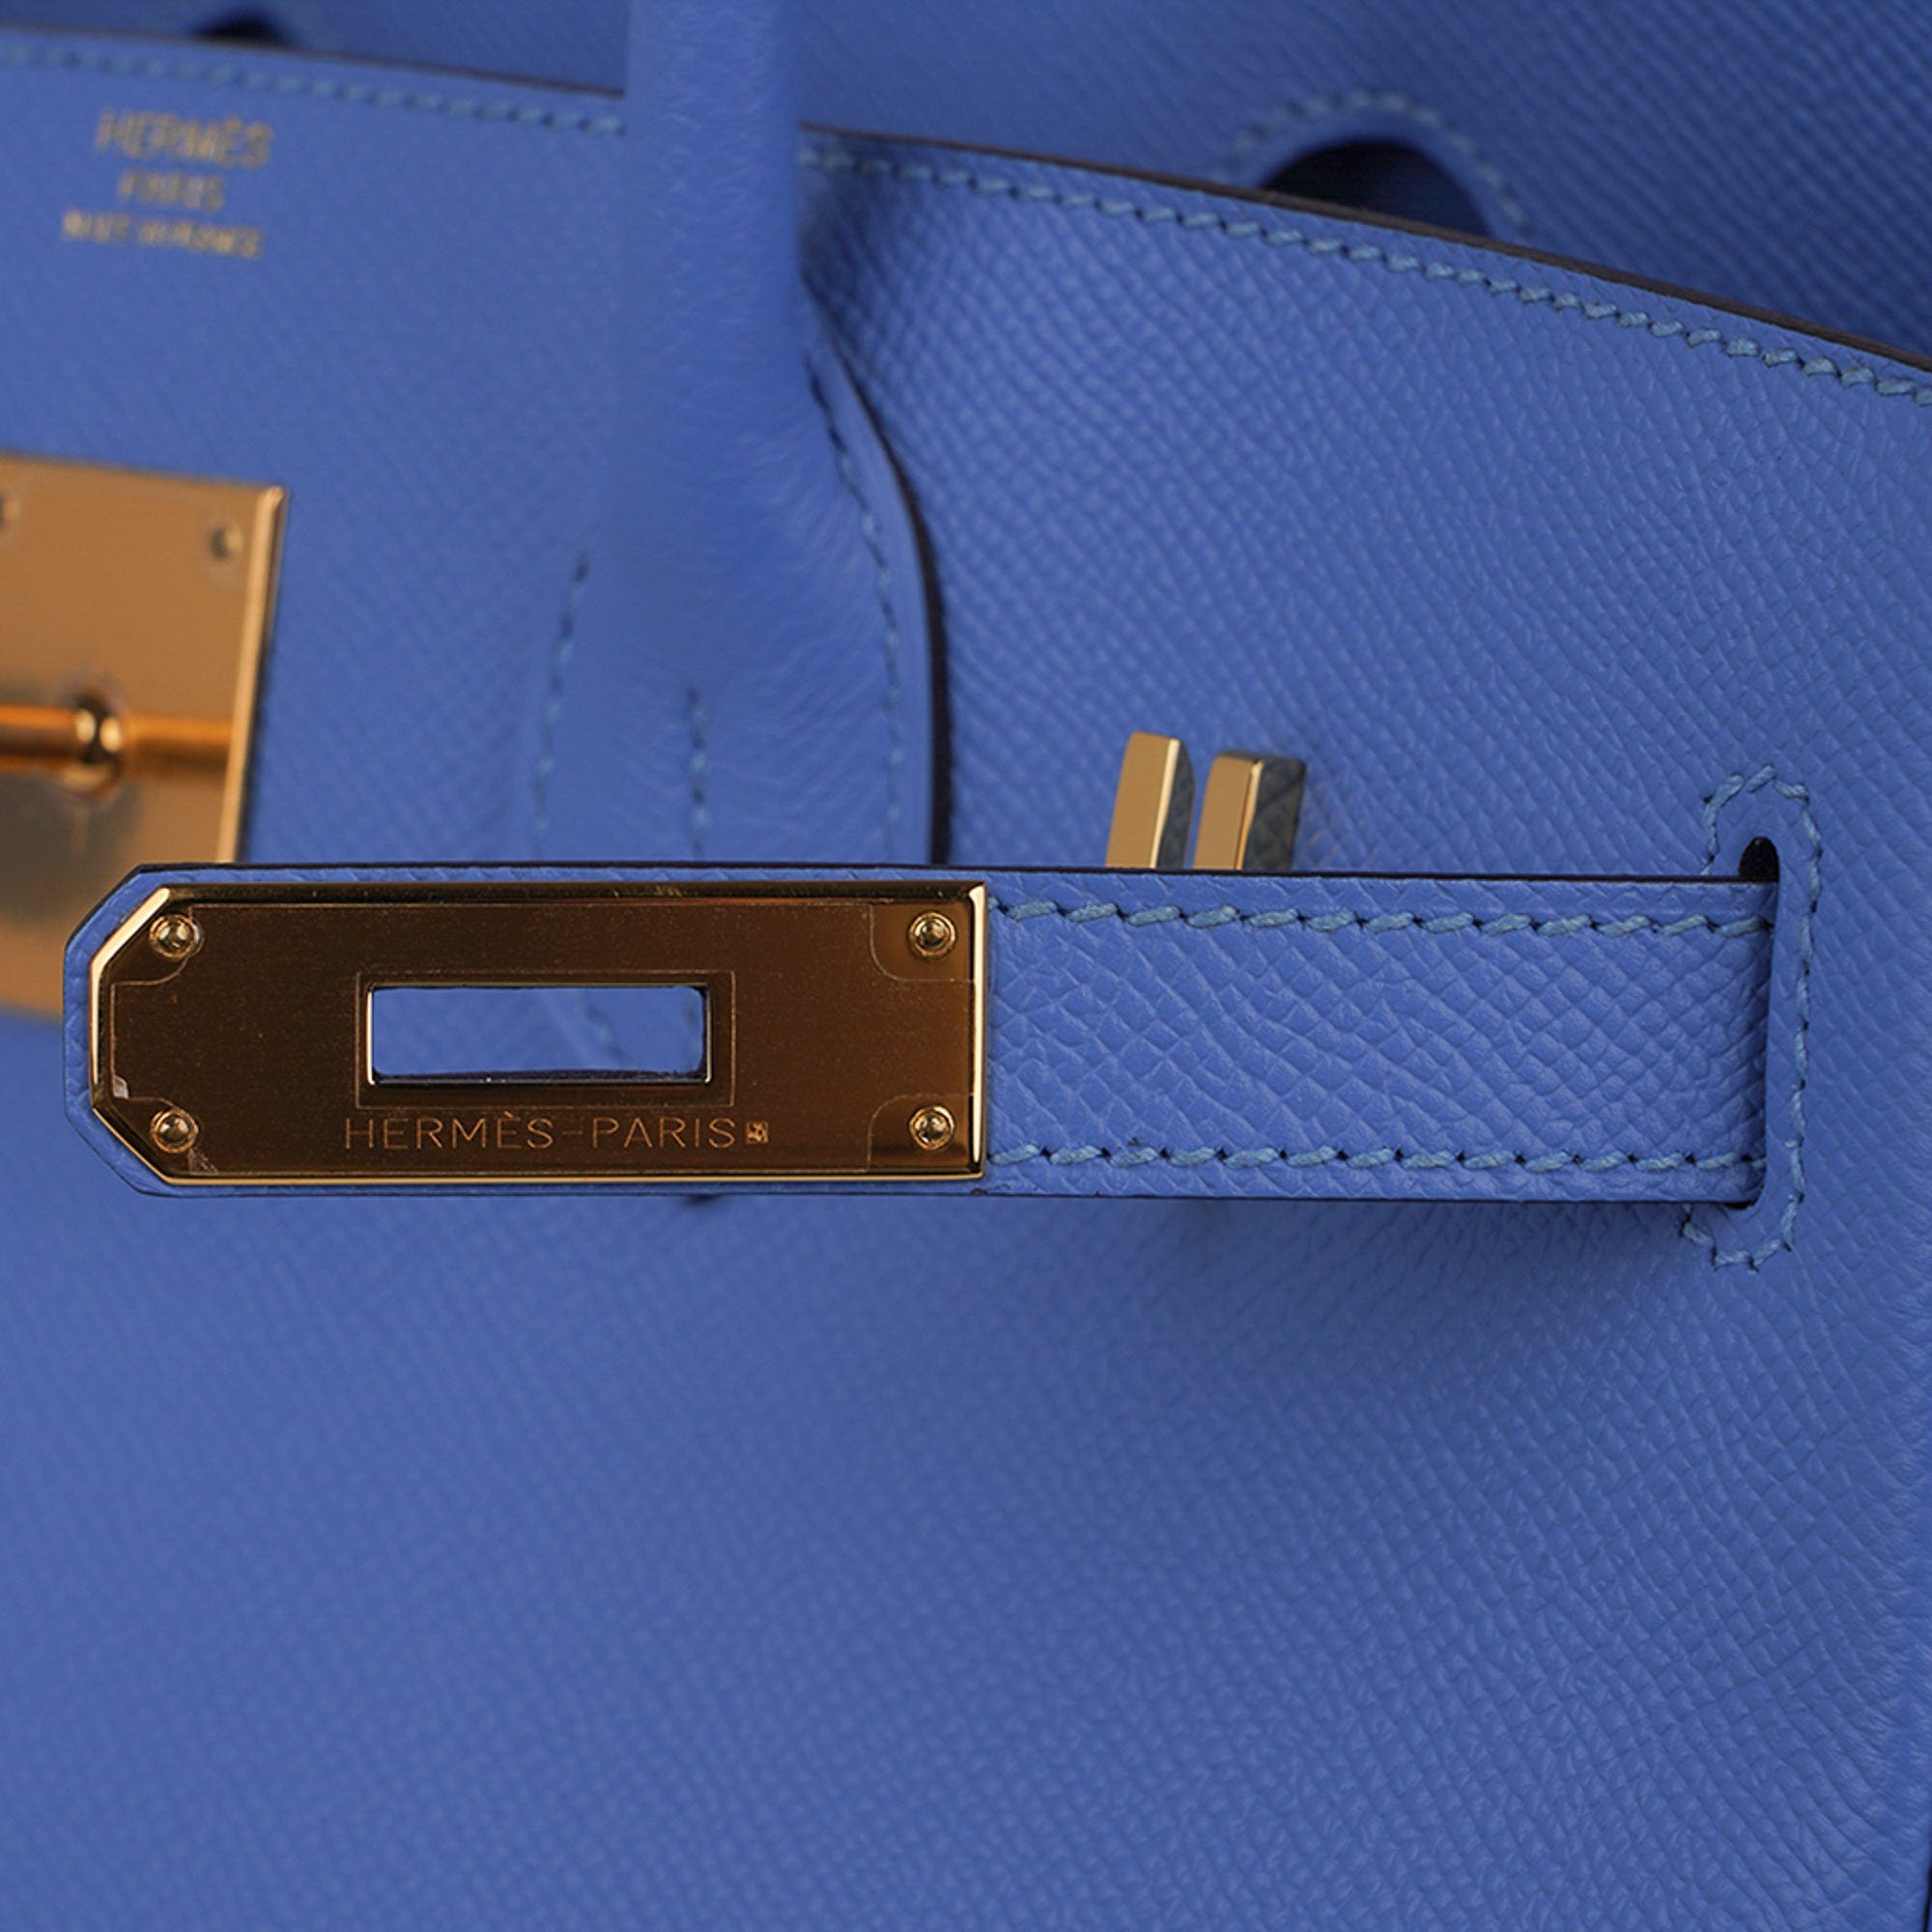 Hermes Birkin Handbag Bleu Paradis Epsom with Palladium Hardware 30